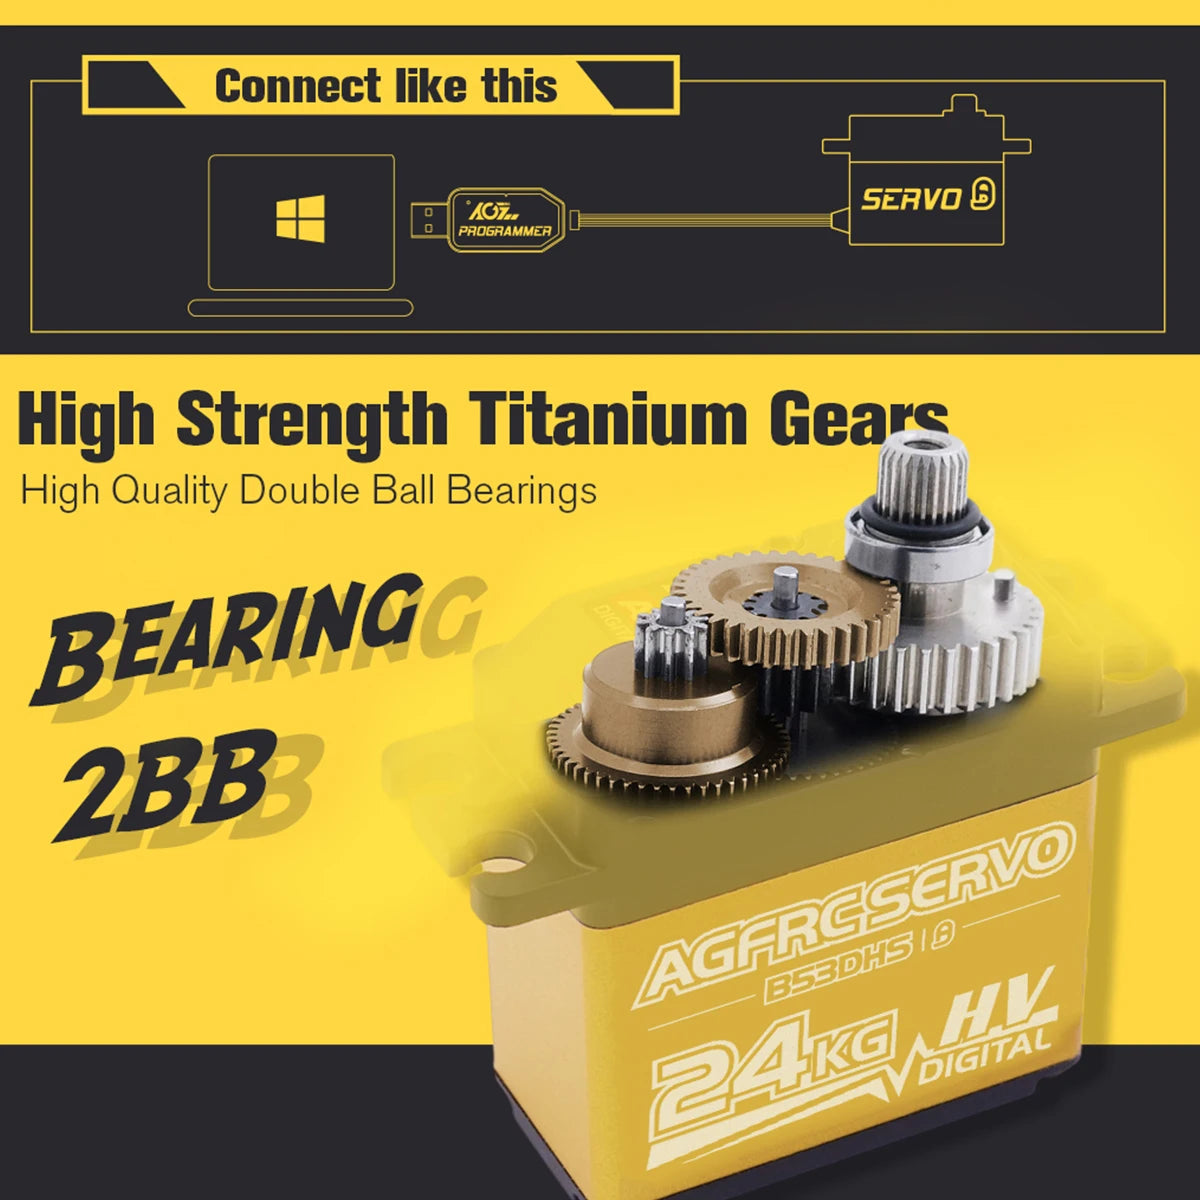 AGFRC B53DHS, High Strength Titanium Gears High Quality Double Ball Bearings BEARING G 2BB I